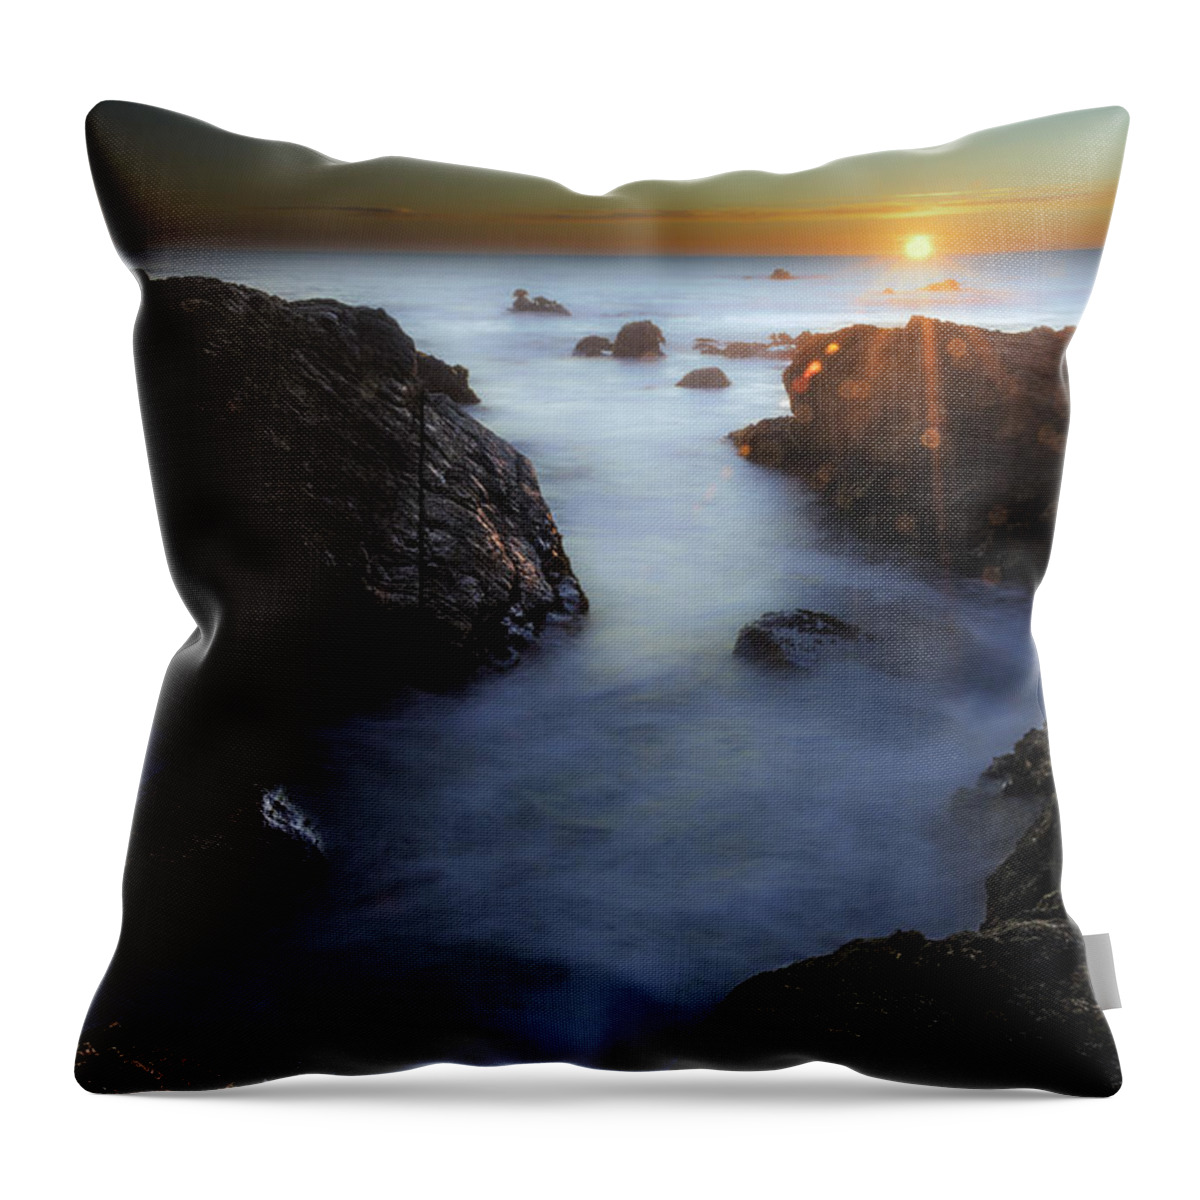 Moss Beach Throw Pillow featuring the photograph Moss Beach Sunset #2 by Don Hoekwater Photography